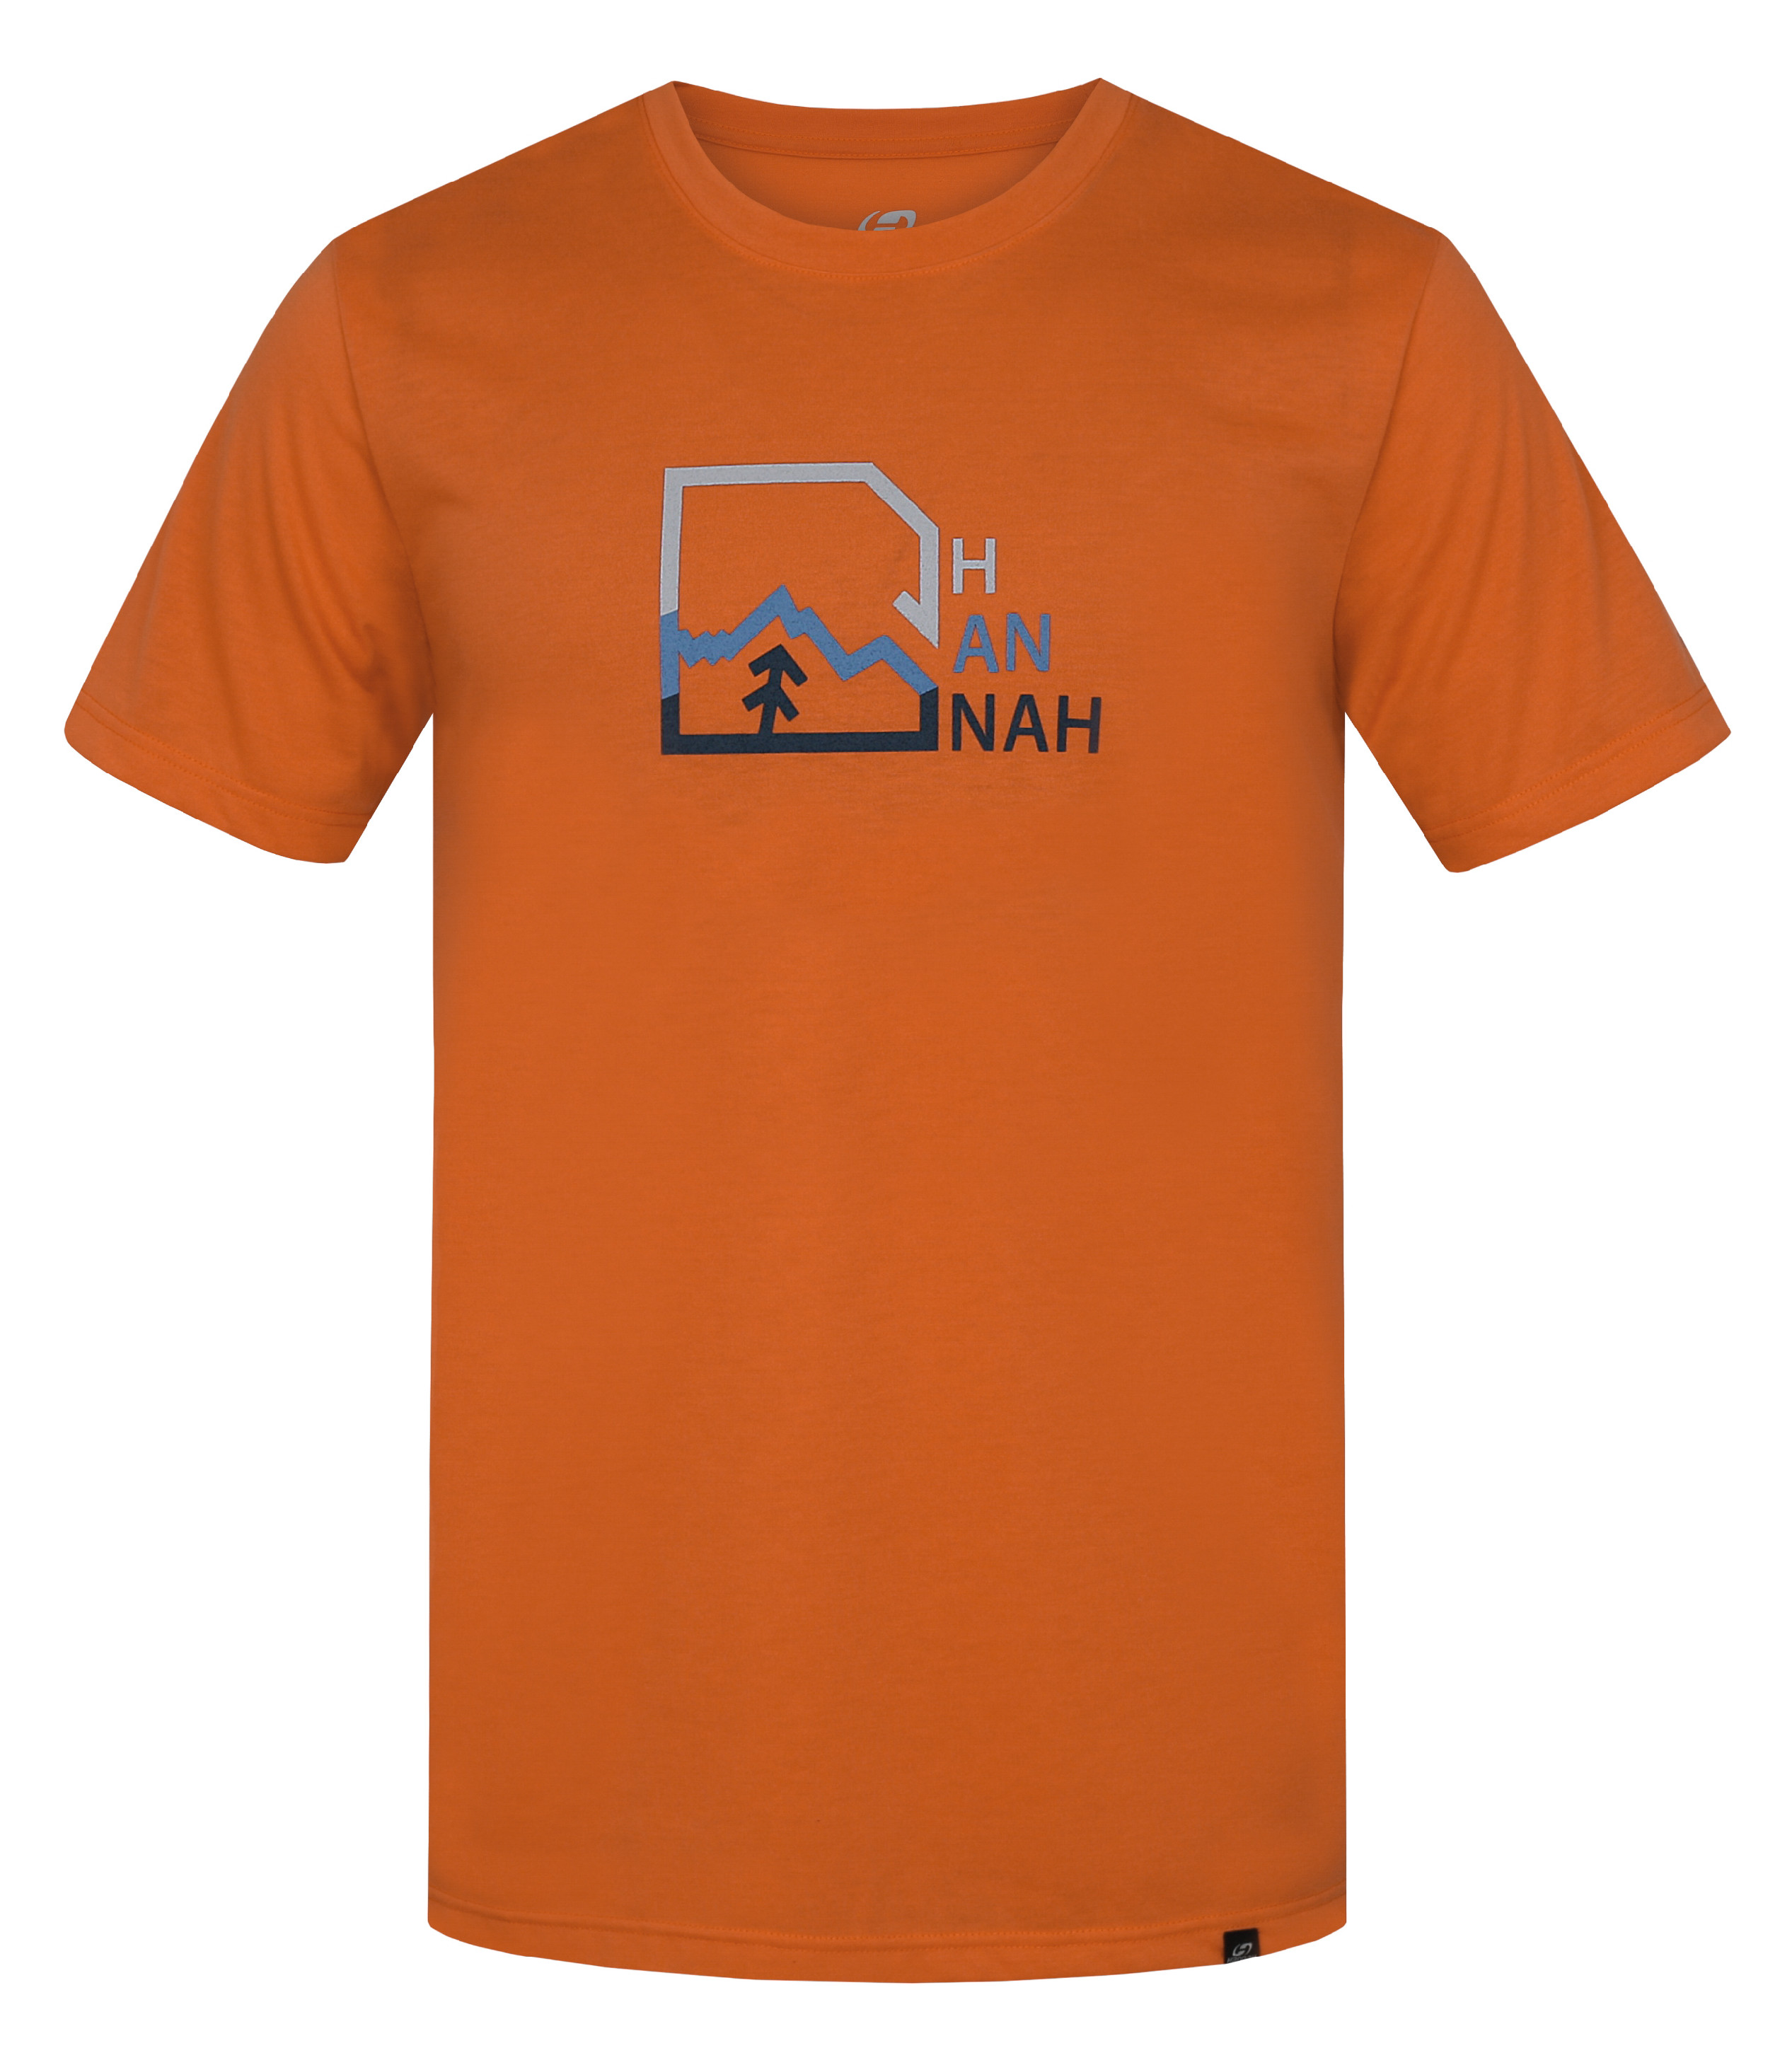 Hannah BITE jaffa orange Velikost: M tričko s krátkým rukávem